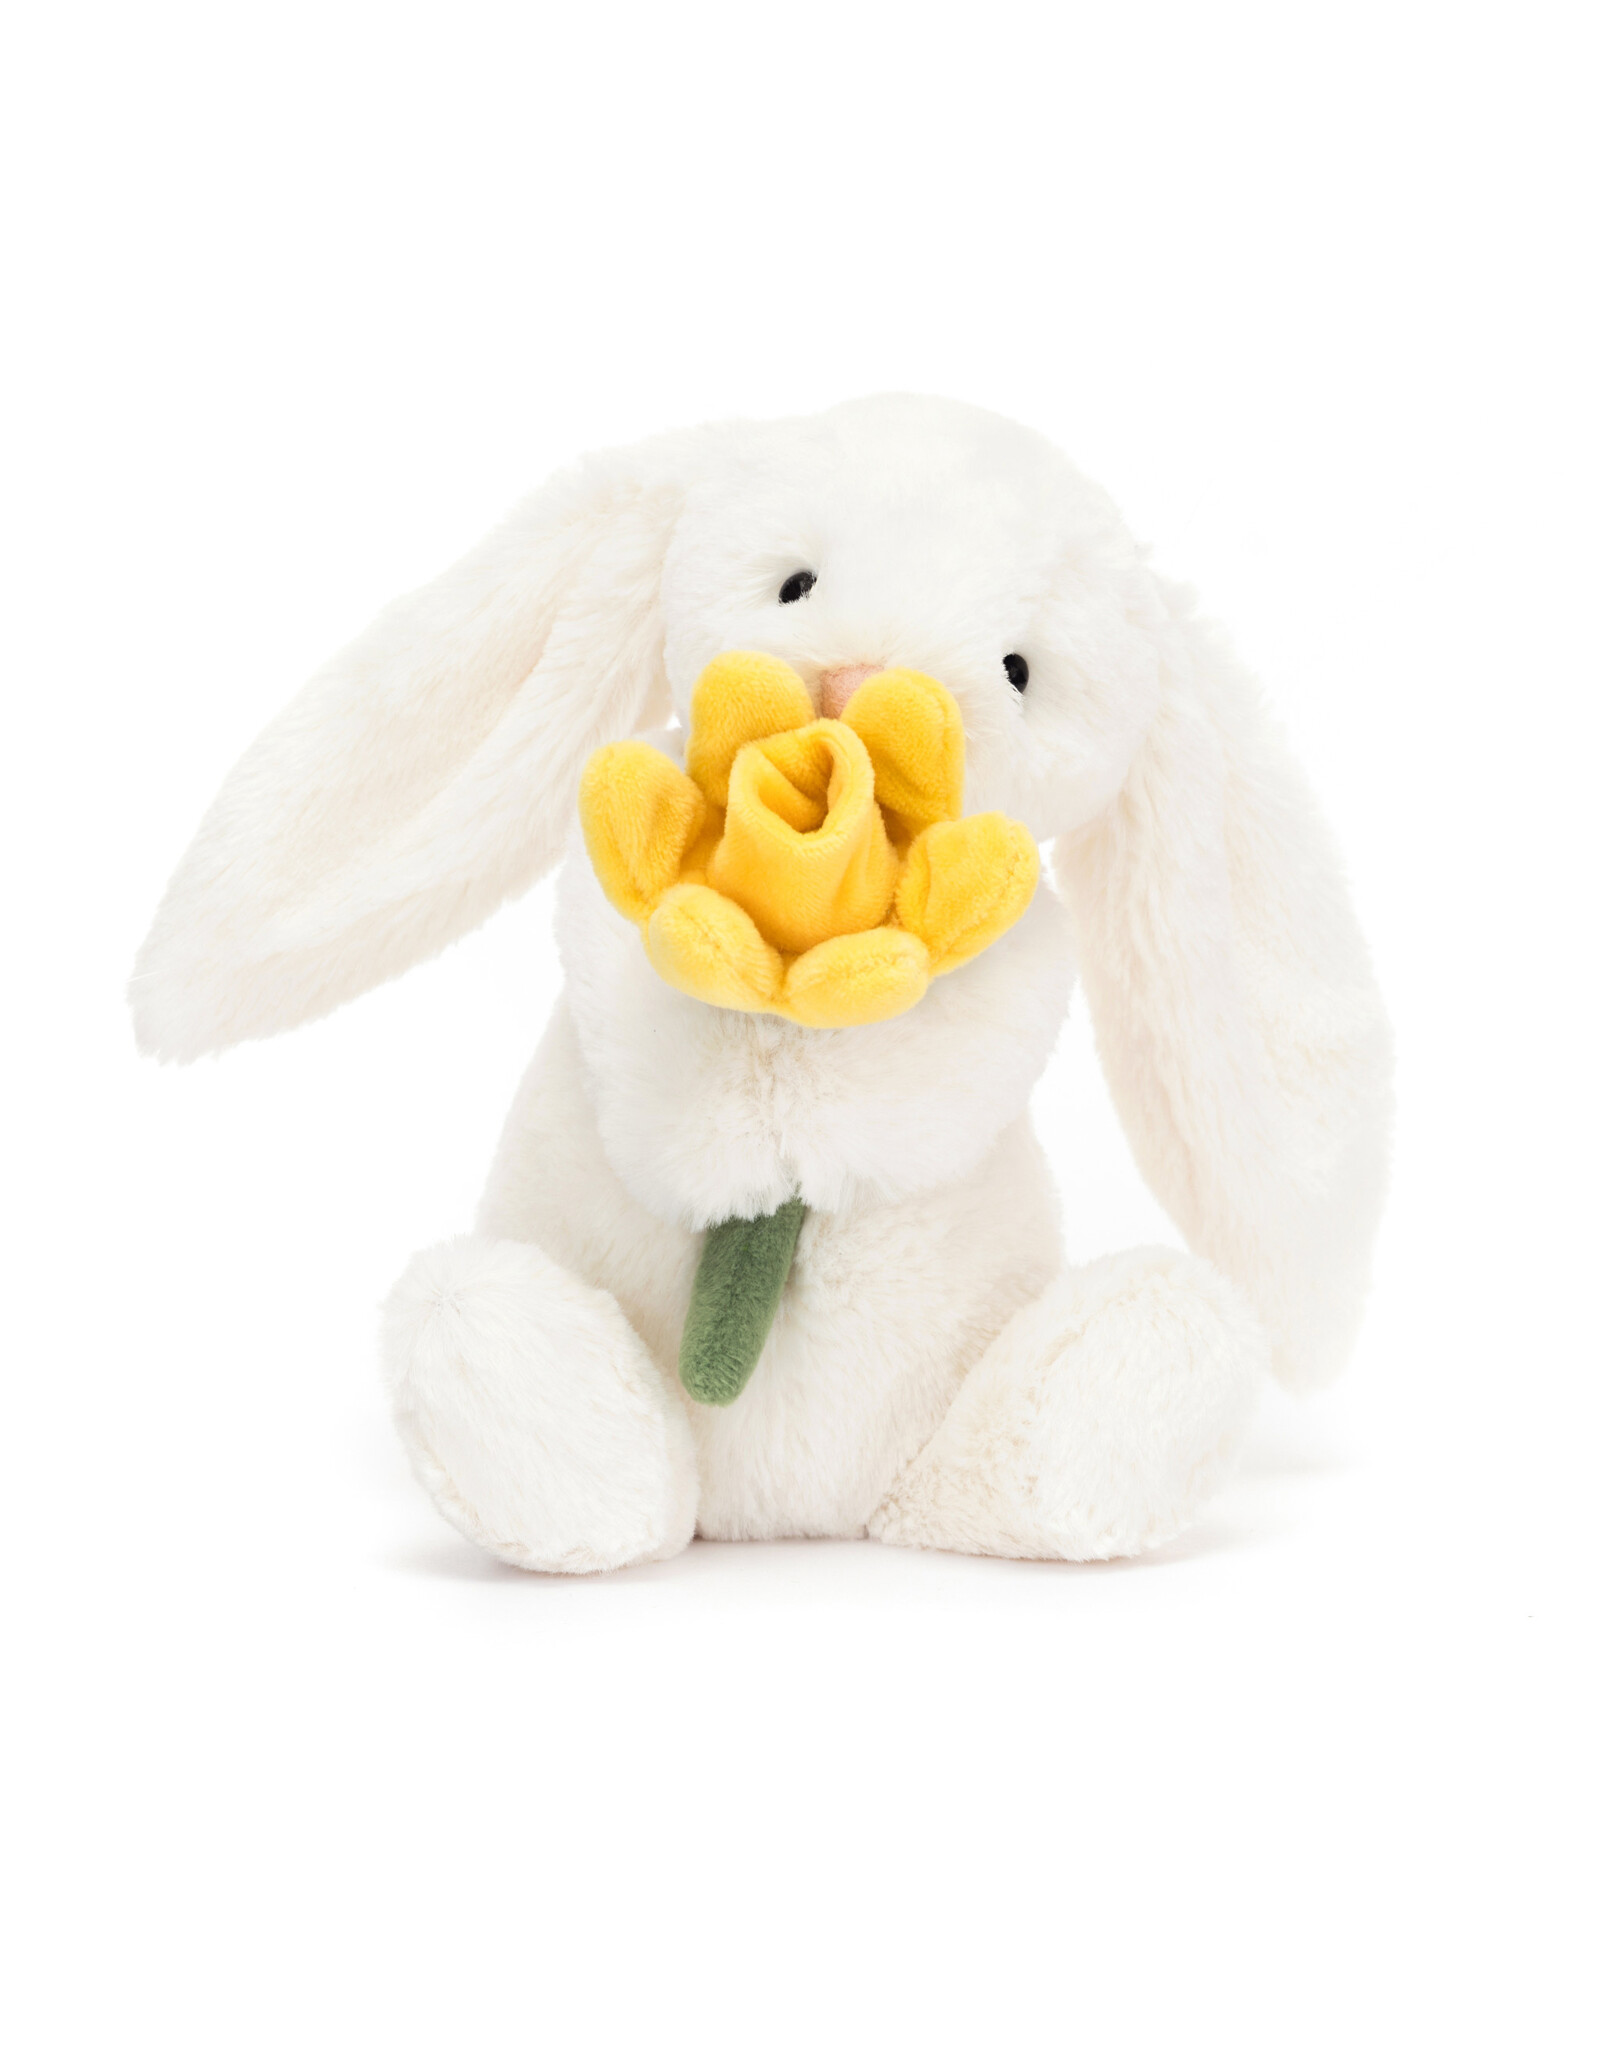 Jellycat Bashful Daffodil Bunny Little